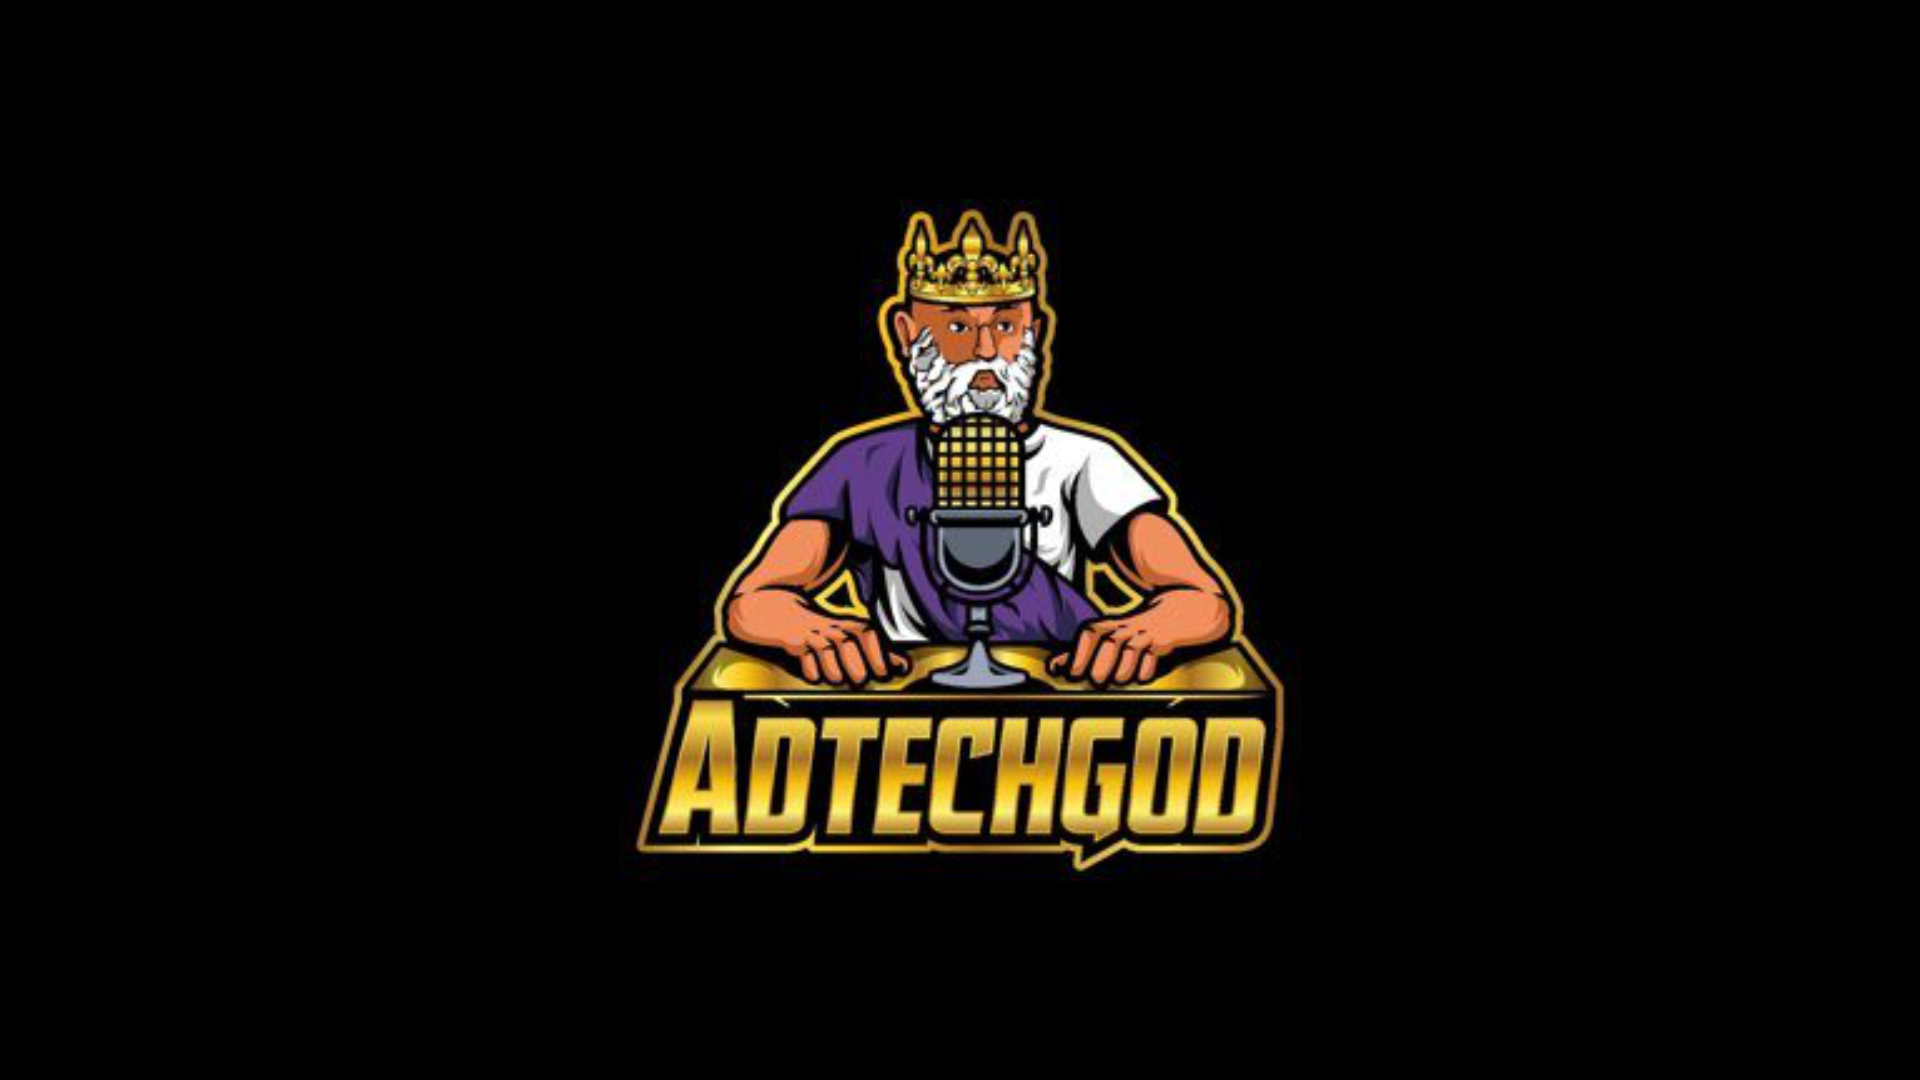 AdTech God Pod